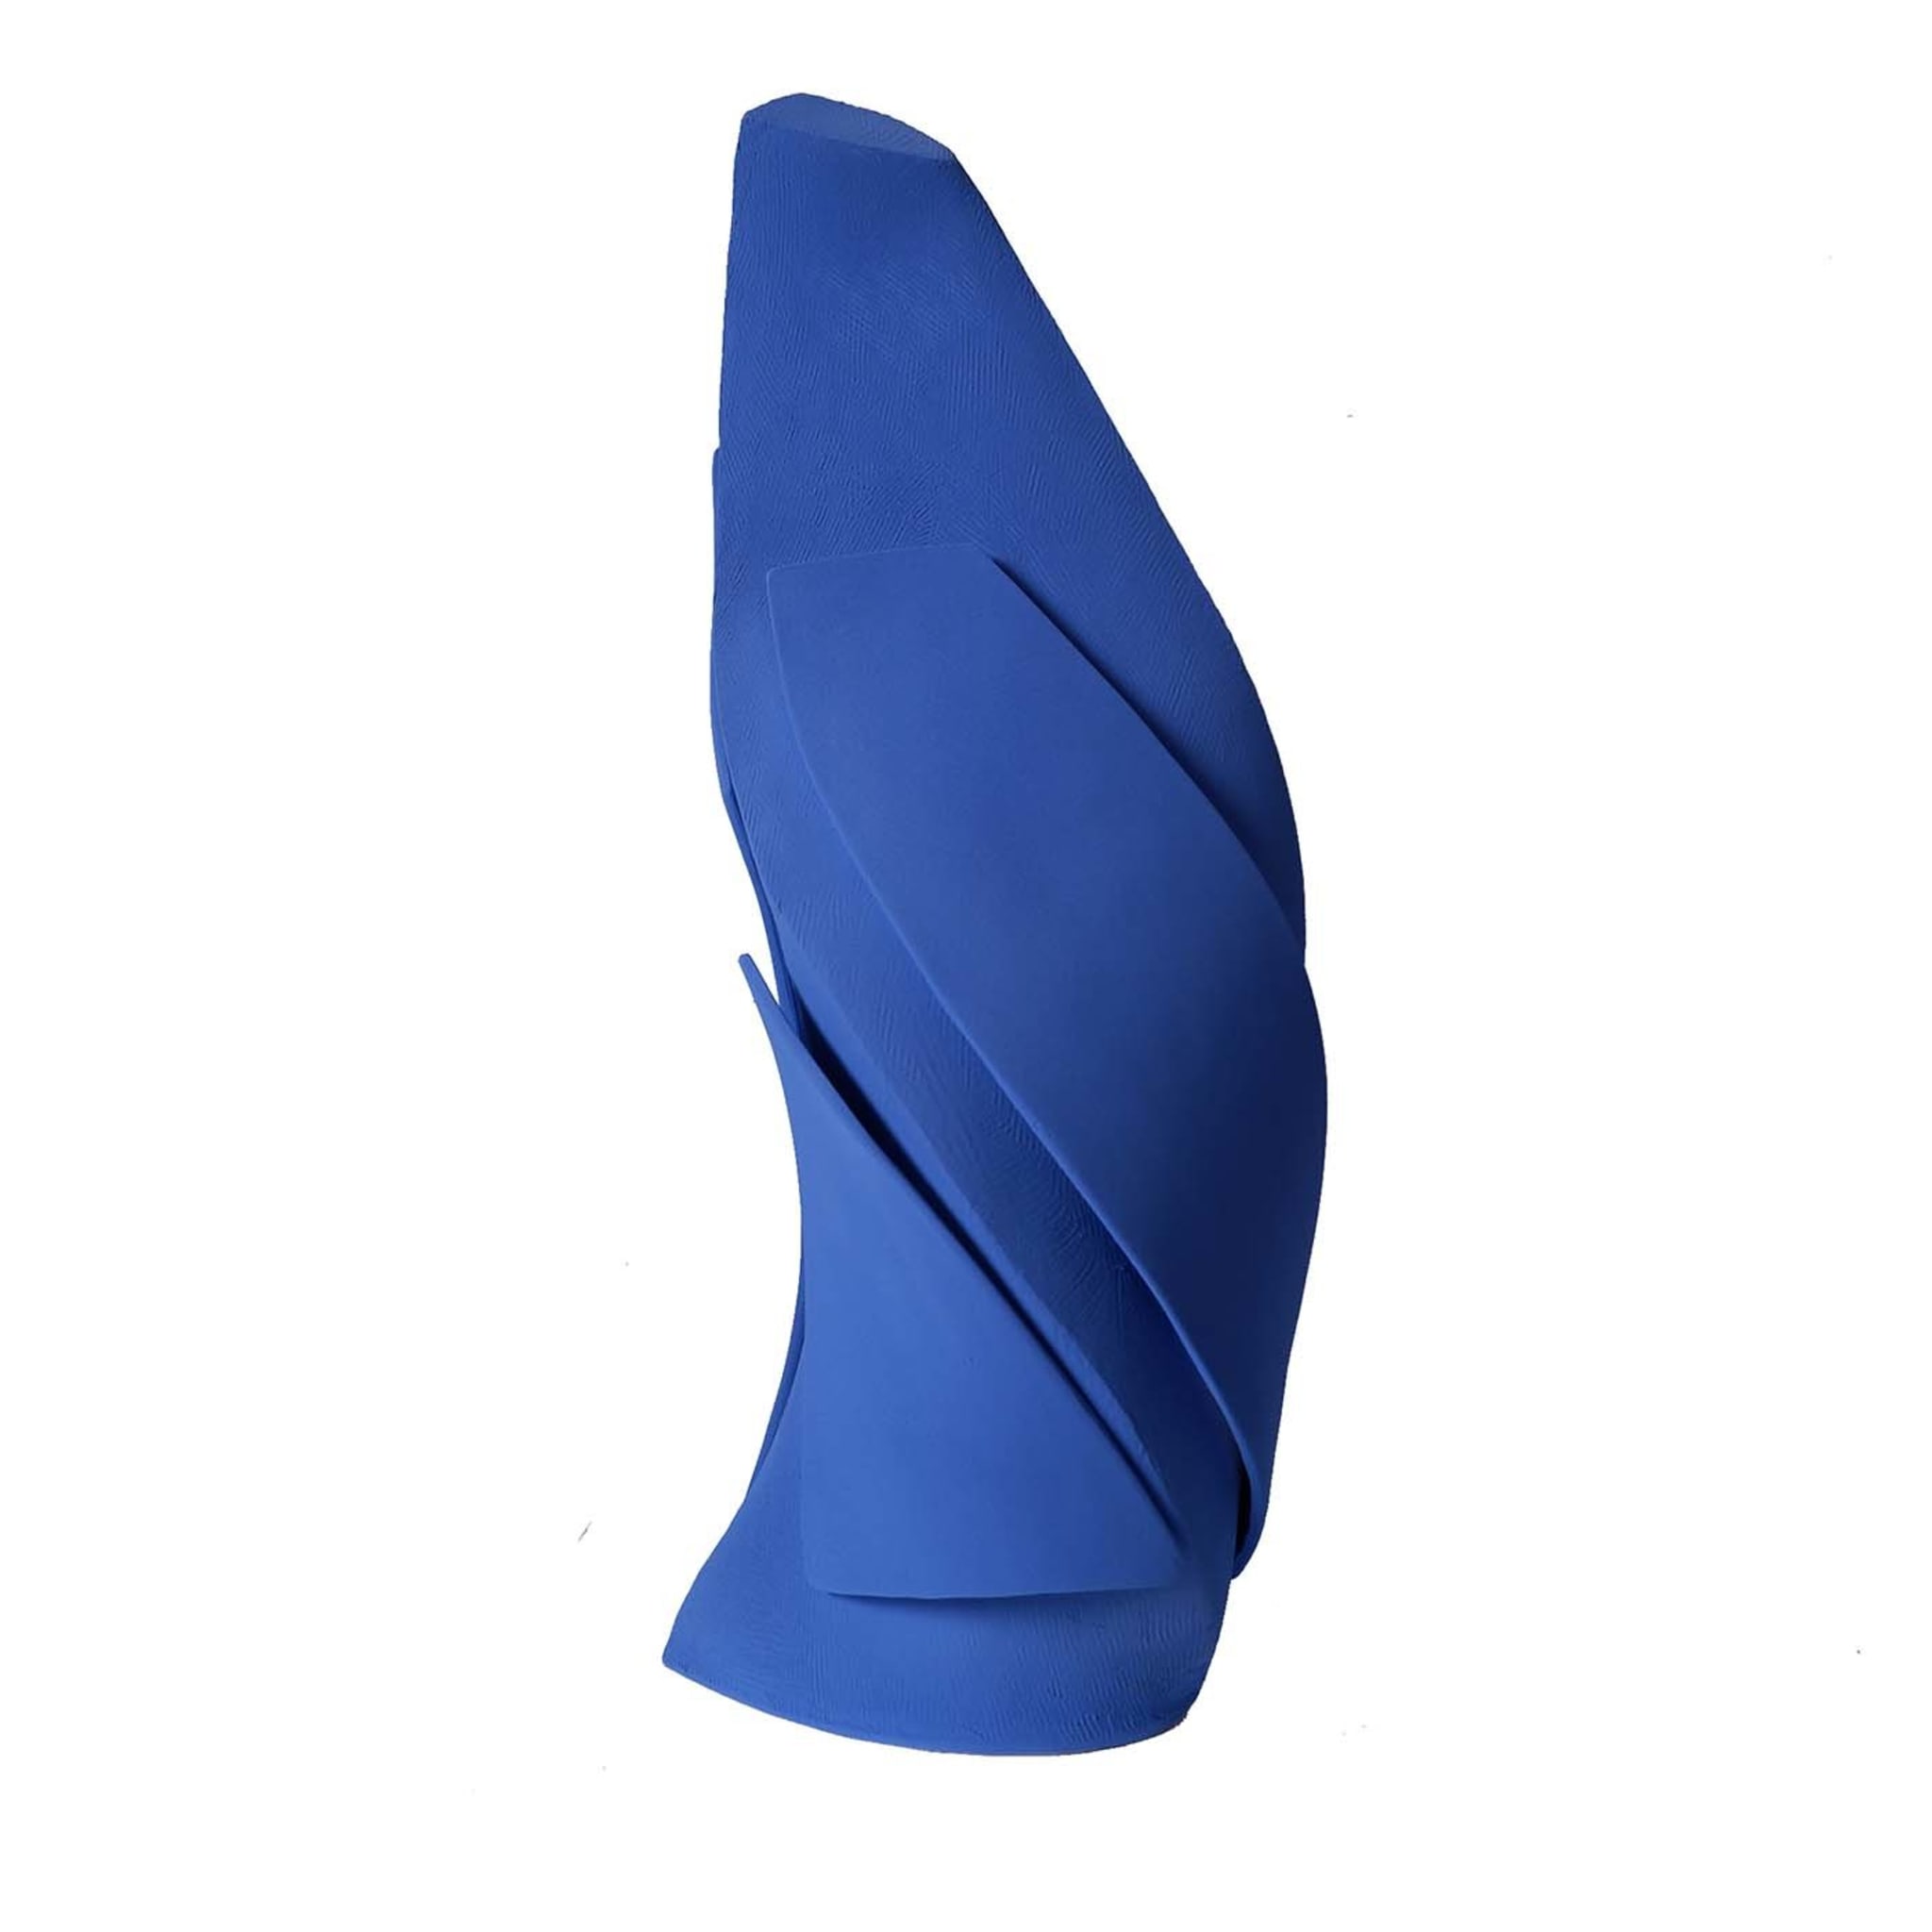 Vase bleu Demeter #1 - Vue principale